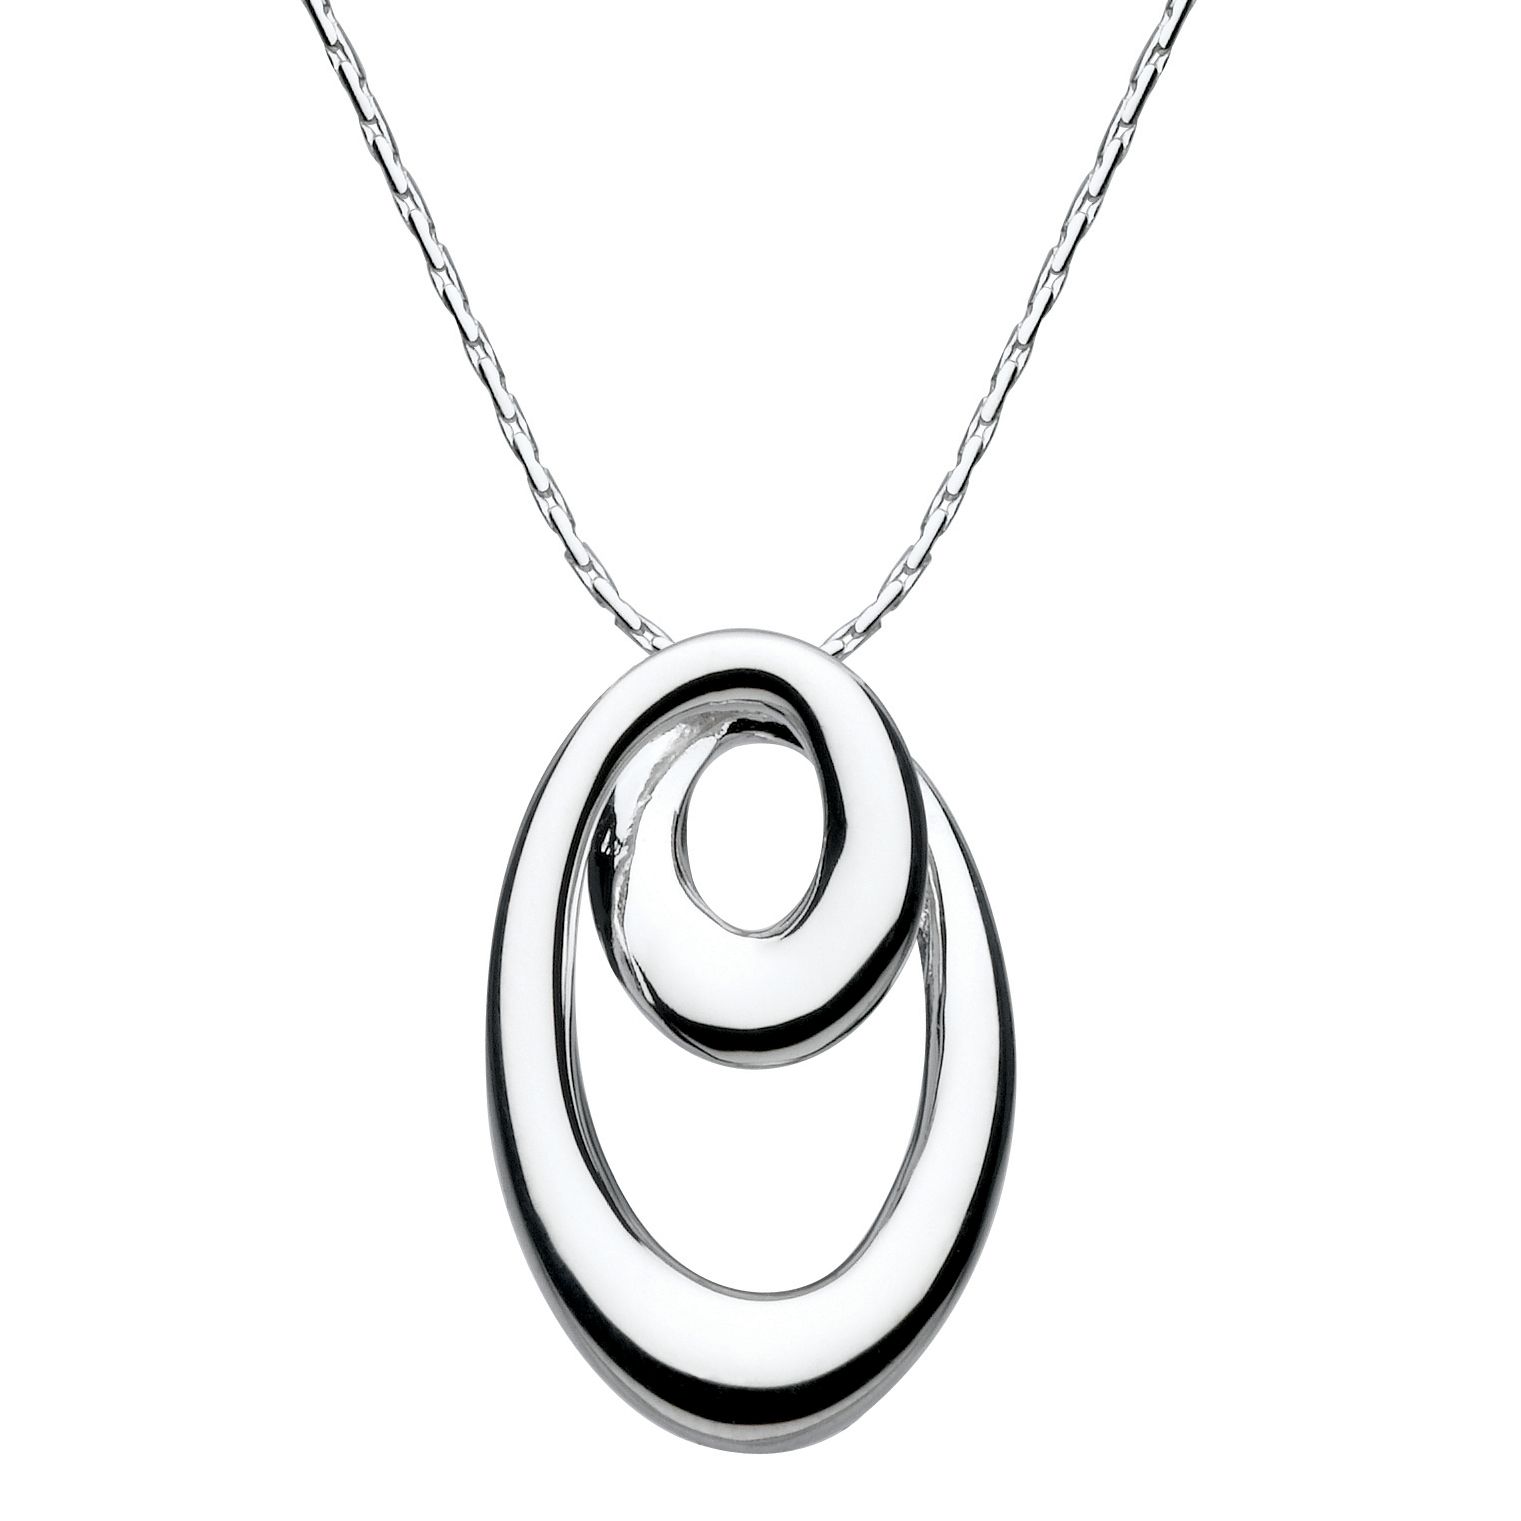 Spiral Sterling Silver Necklace